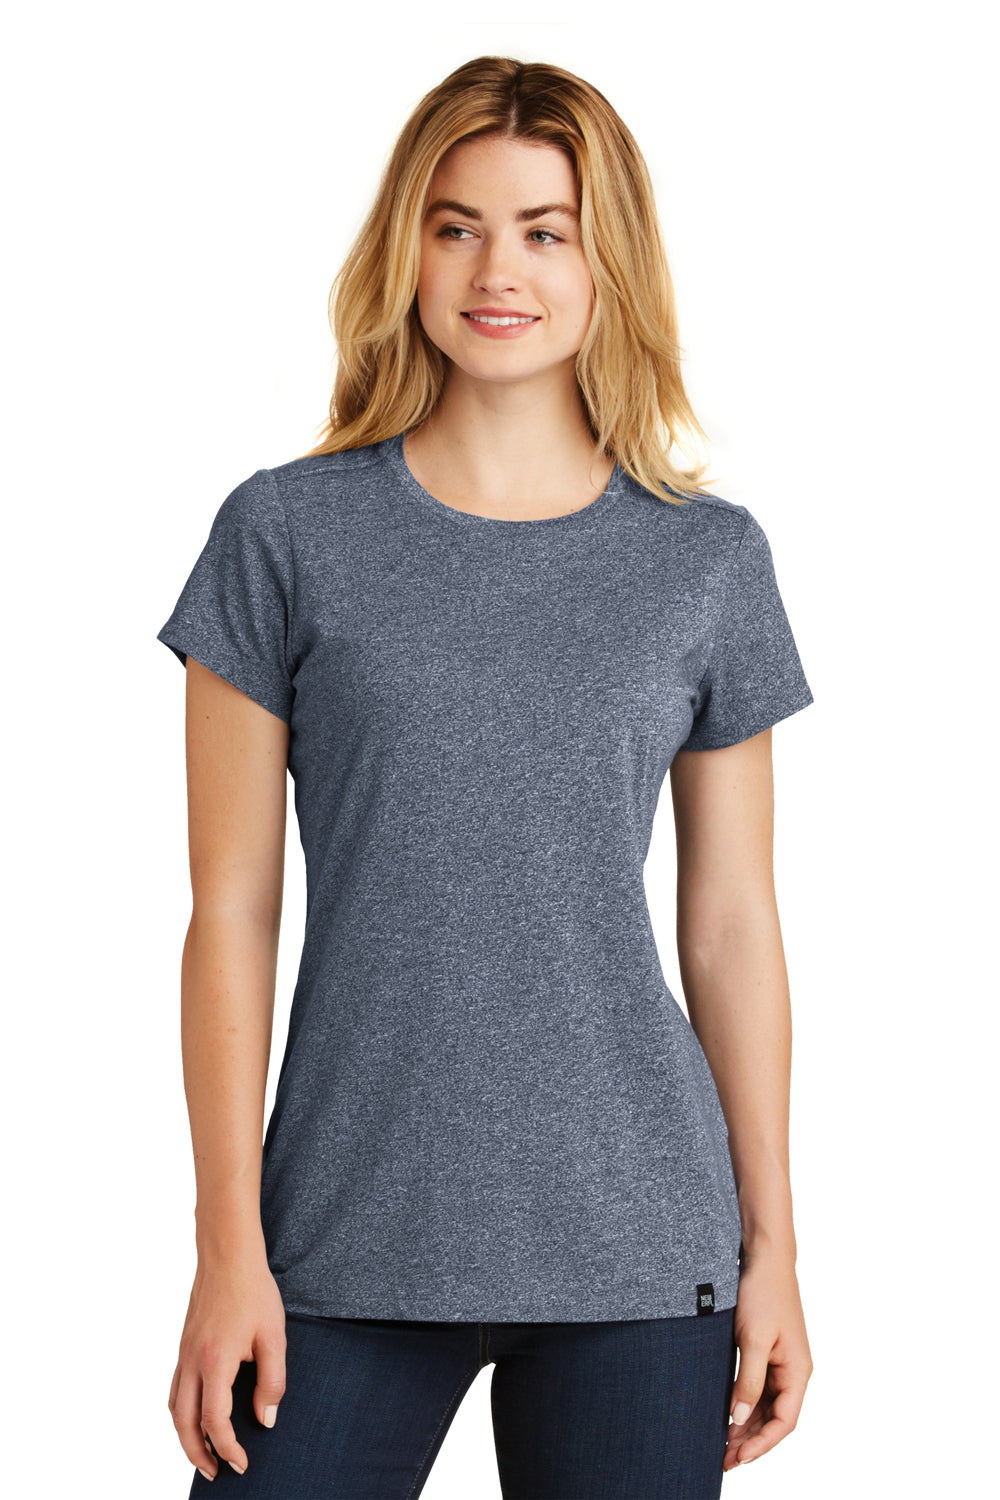 New Era LNEA100 Womens Heritage Short Sleeve Crewneck T-Shirt Navy Blue Twist Front